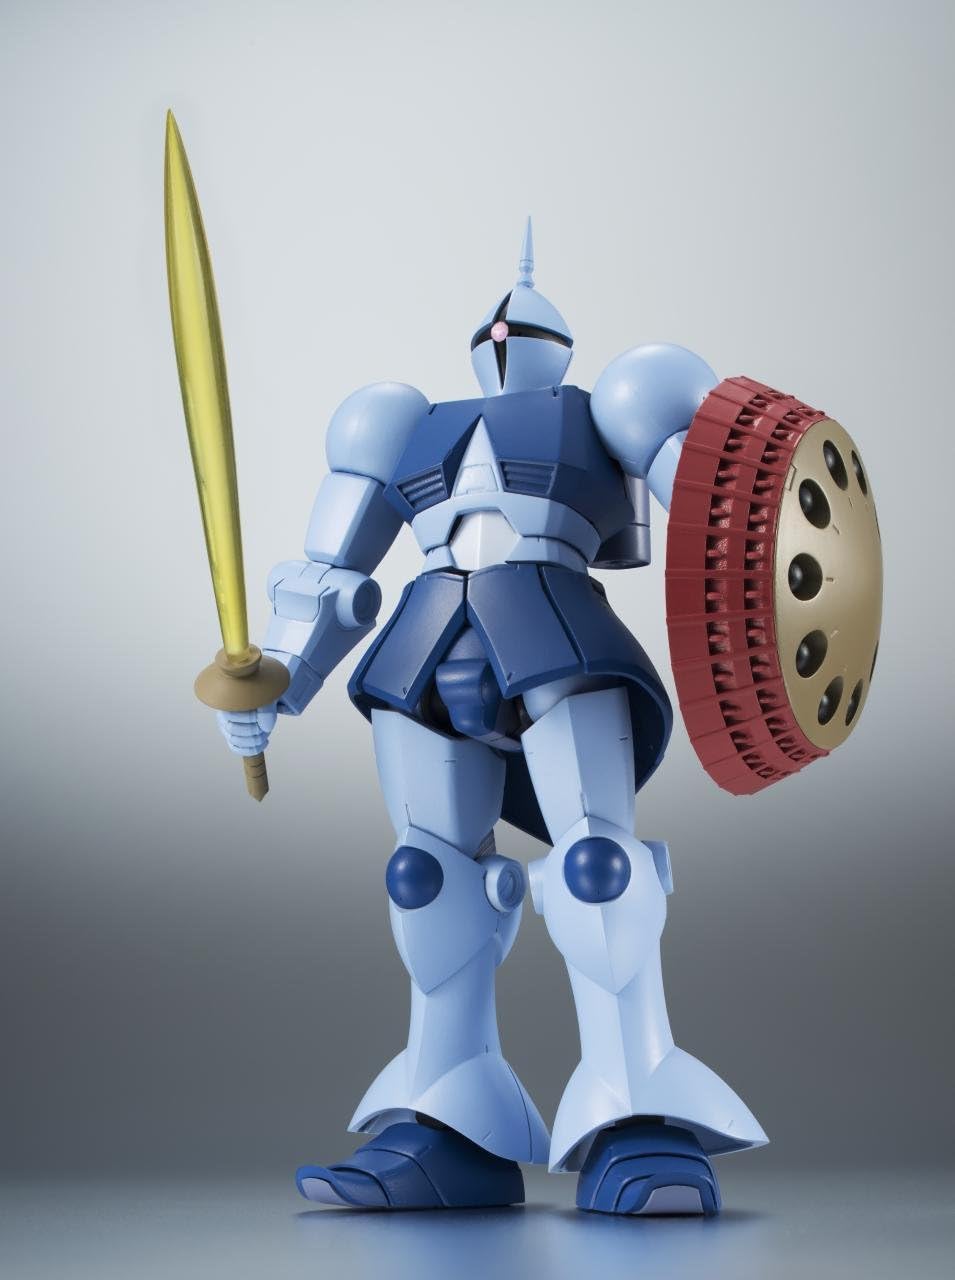 Robot Spirits -SIDE MS- YMS-15 Gyan ver. A.N.I.M.E. "Mobile Suit Gundam" | animota